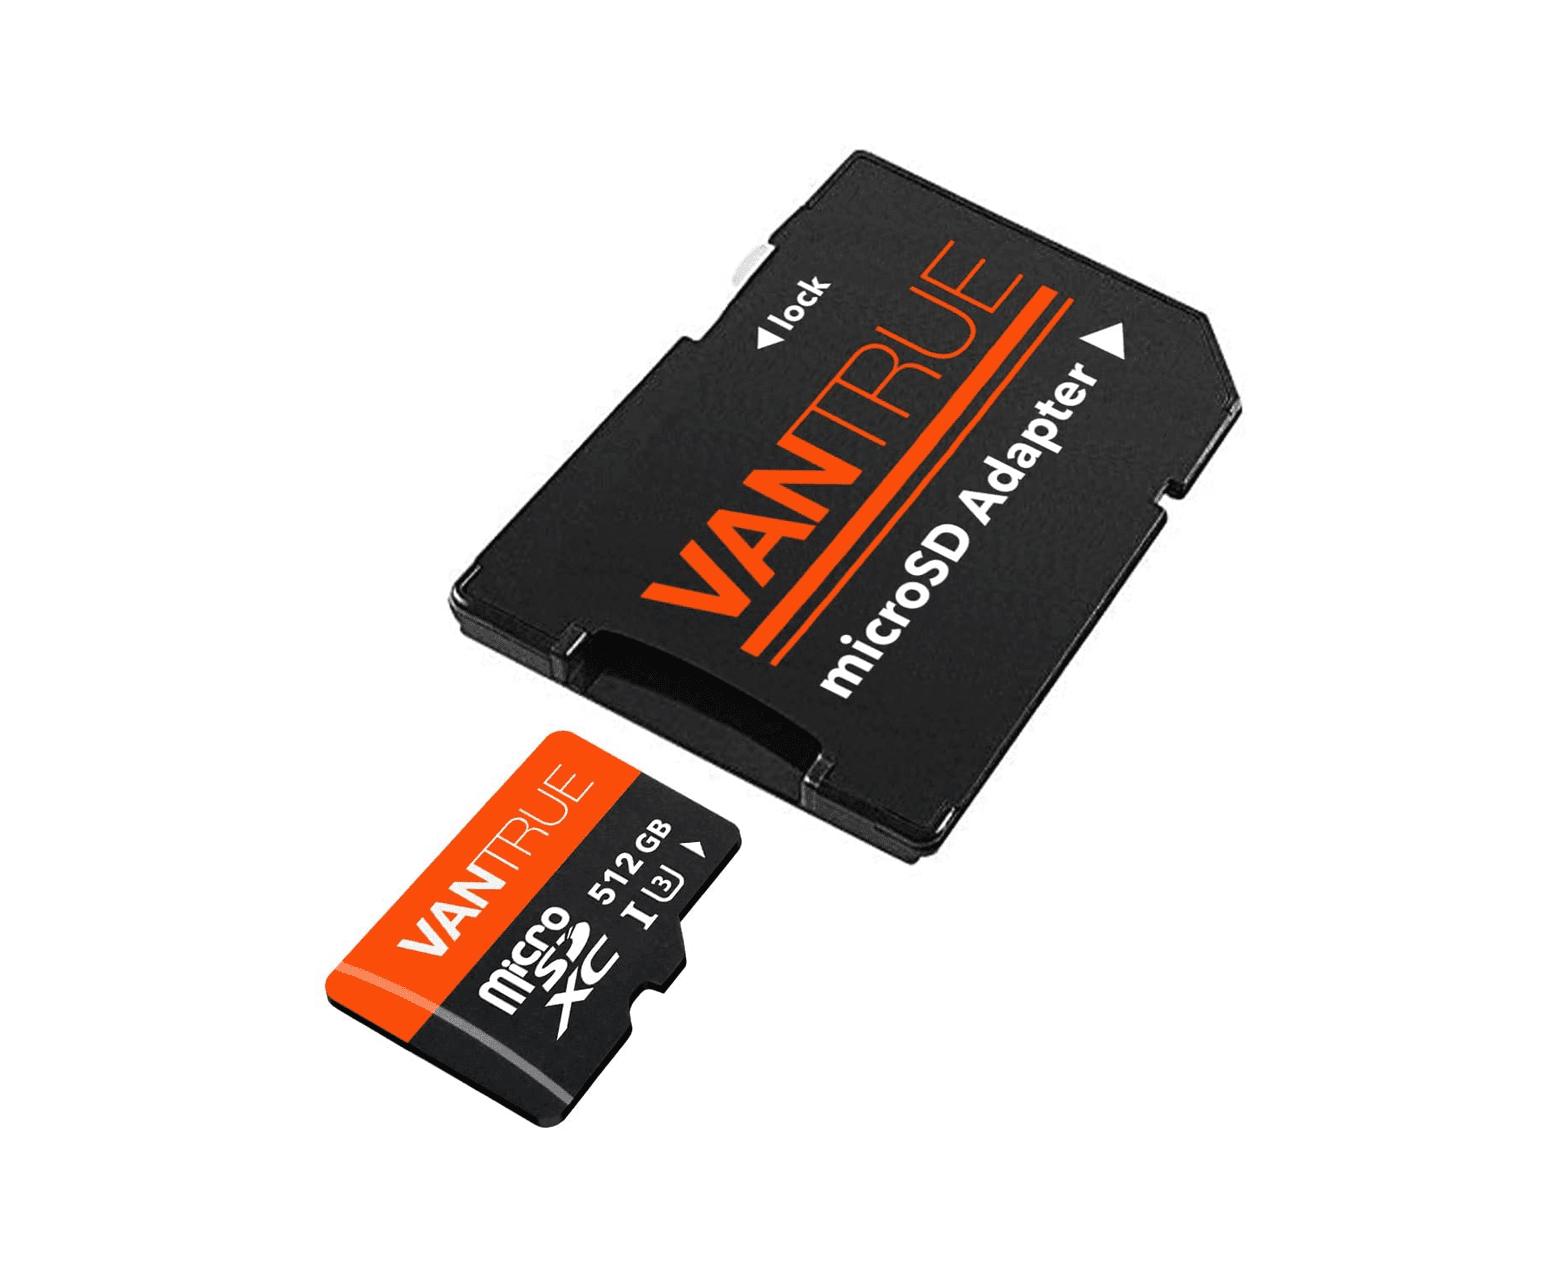 Vantrue 512GB SD card 